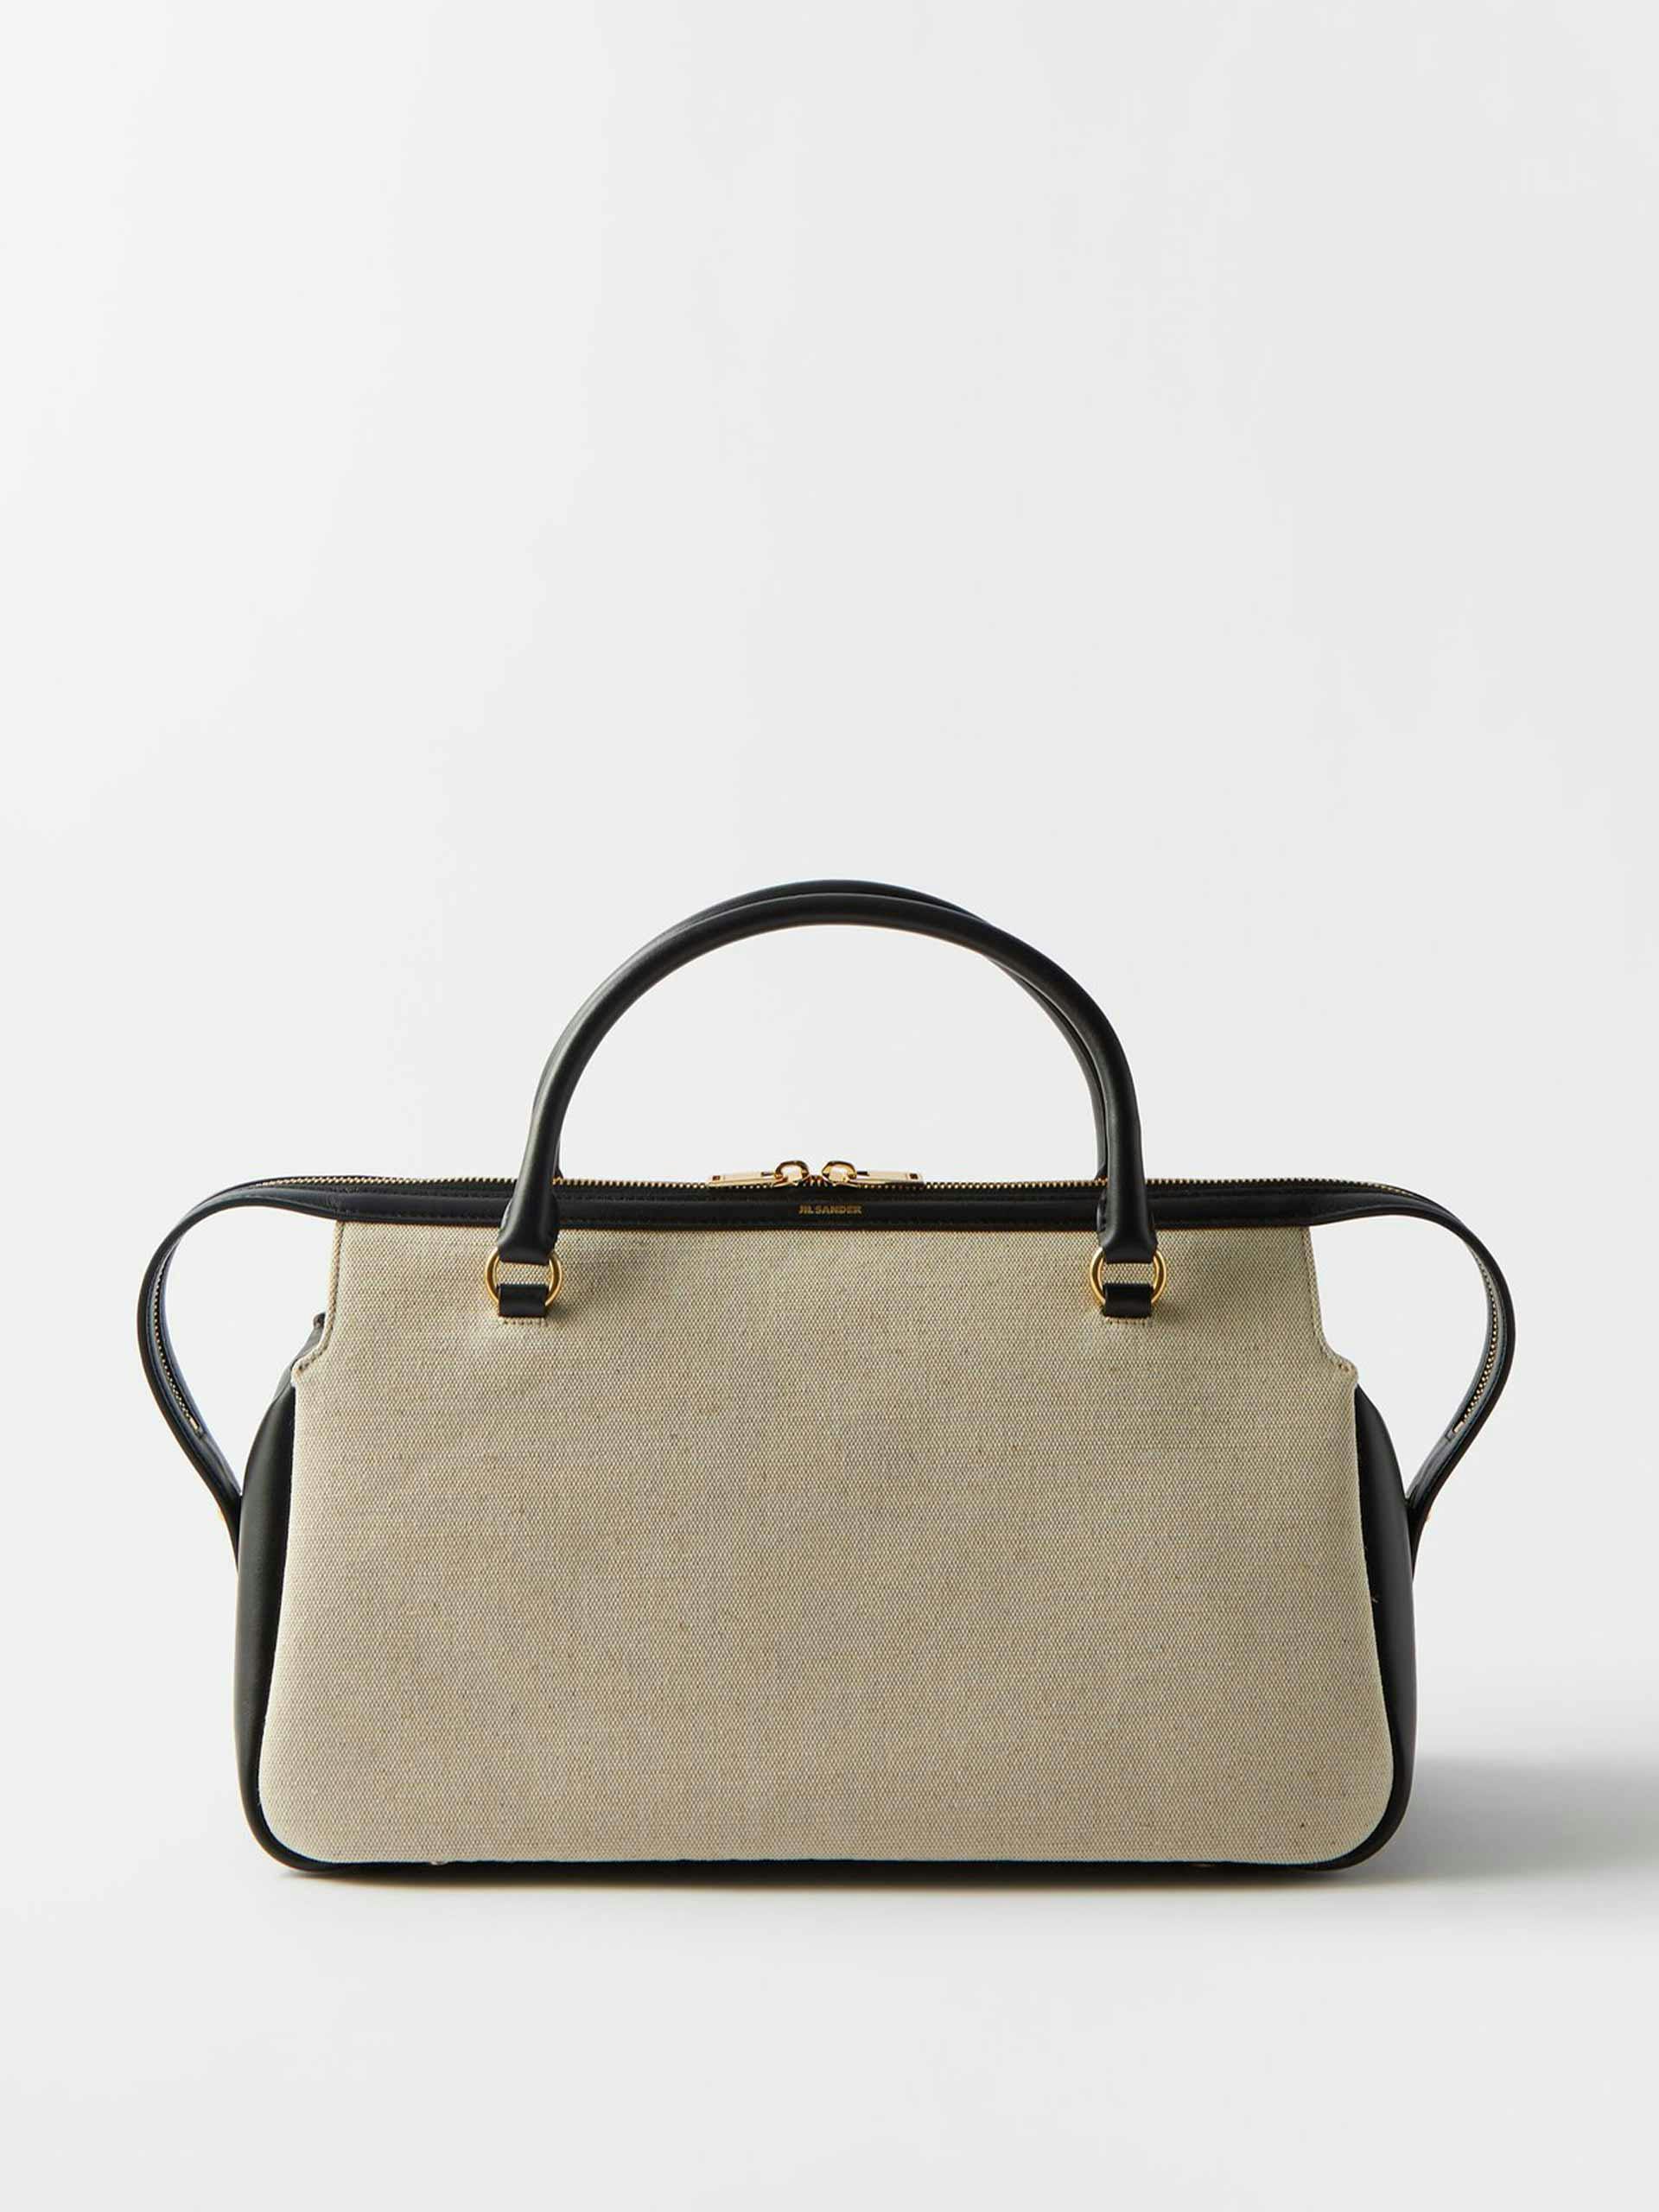 Beige canvas and leather handbag